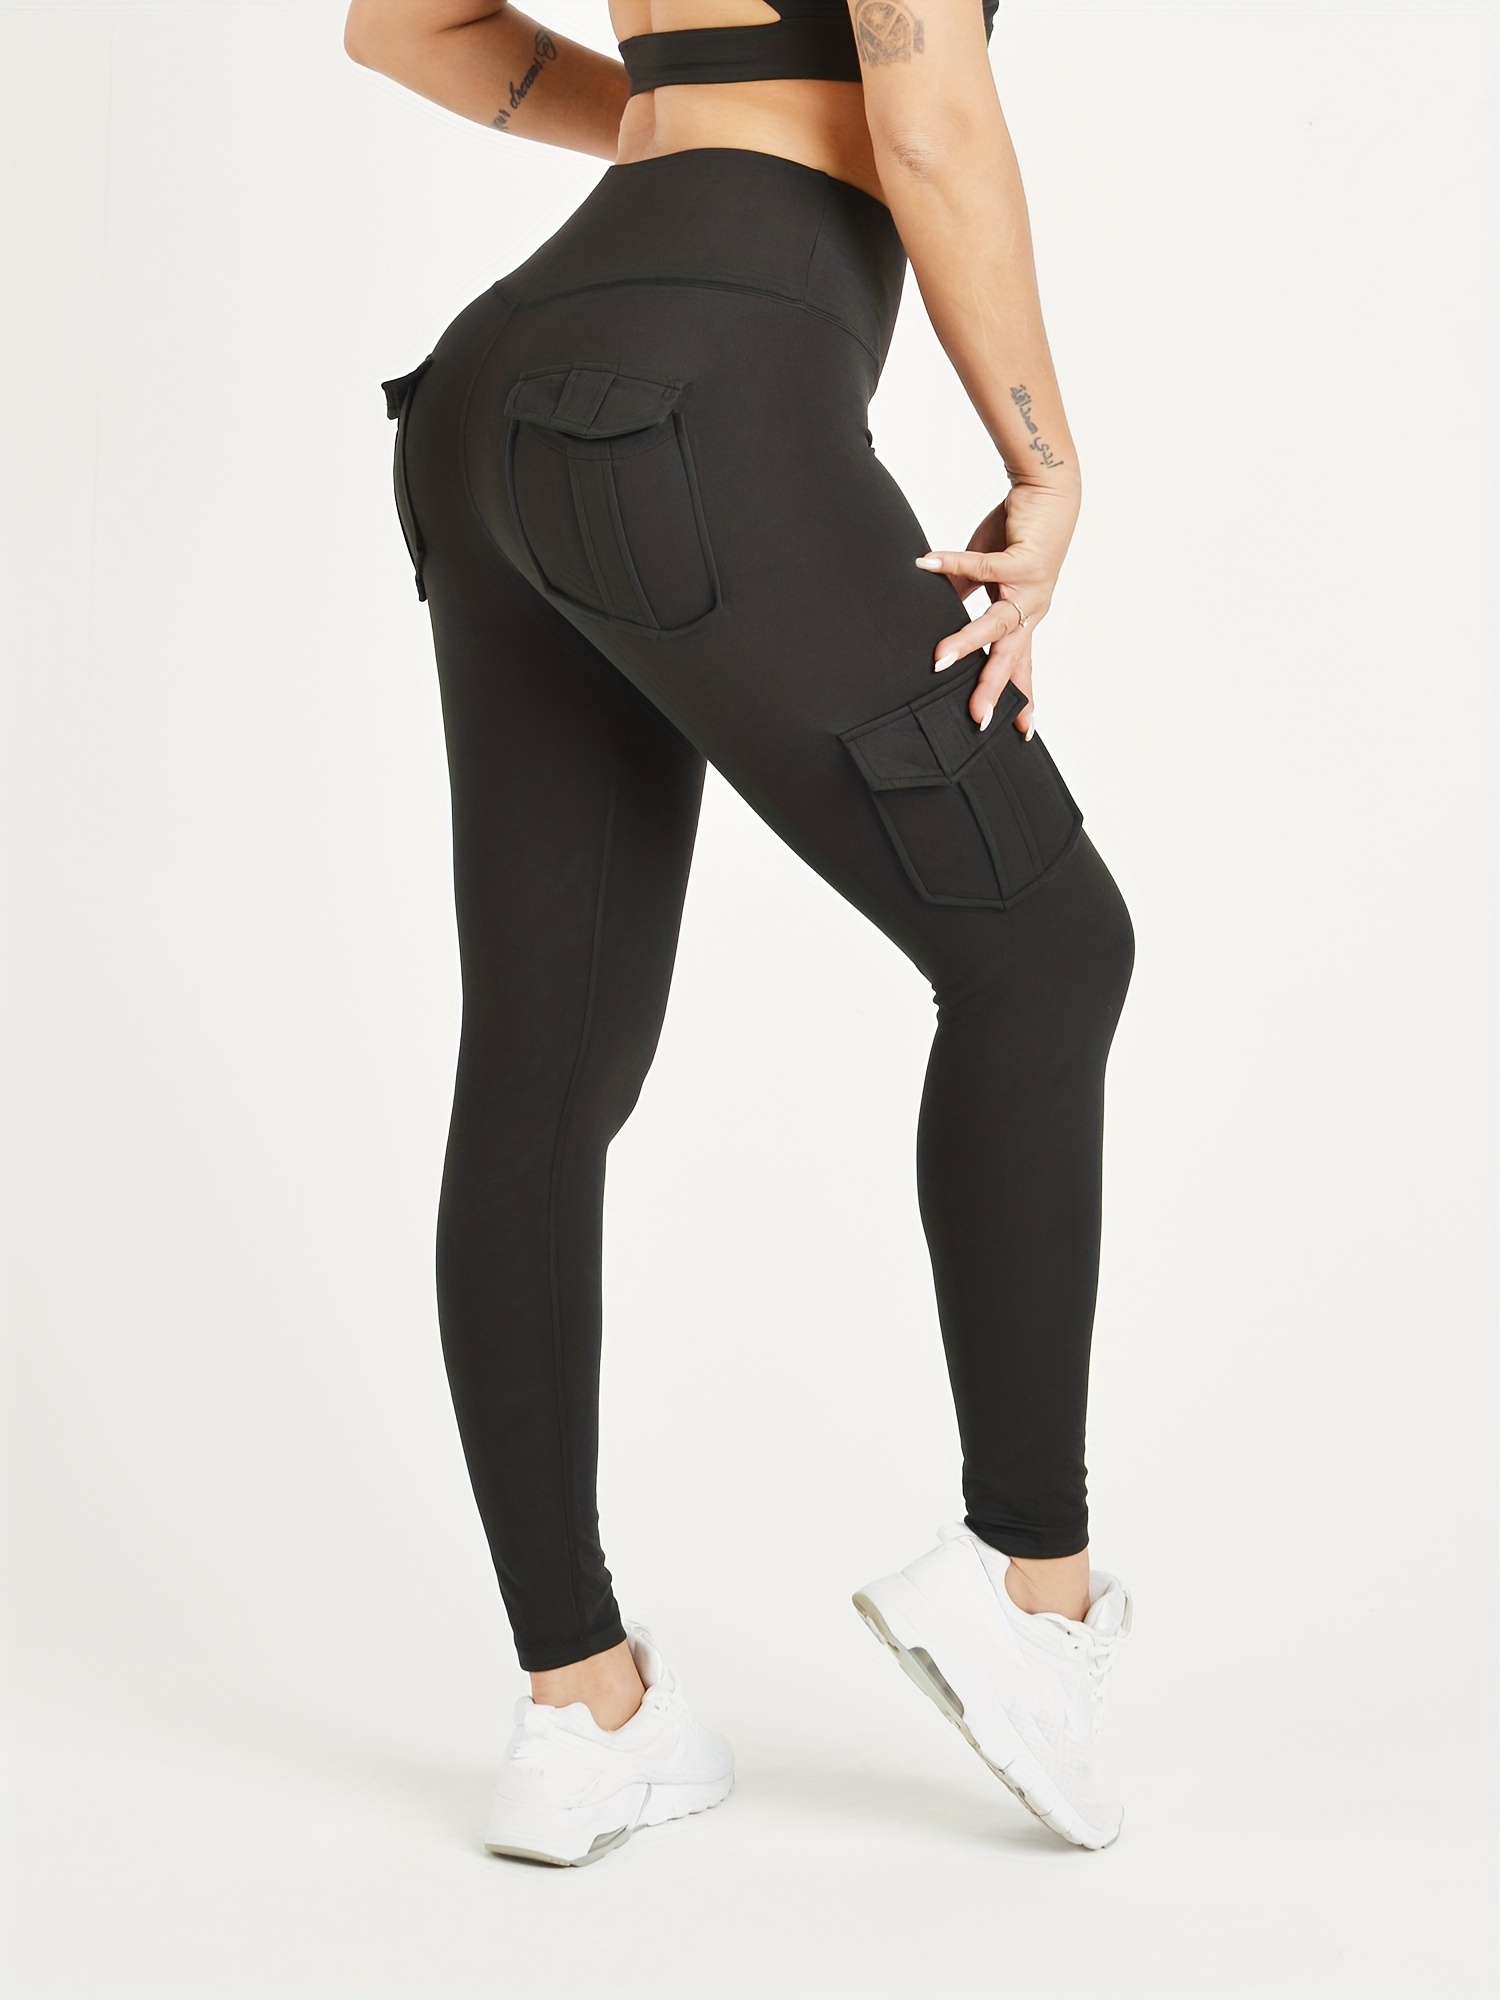 Womens Compression Cargo Yoga Pants Pockets High Waist Slim Fit Workout  leggings 